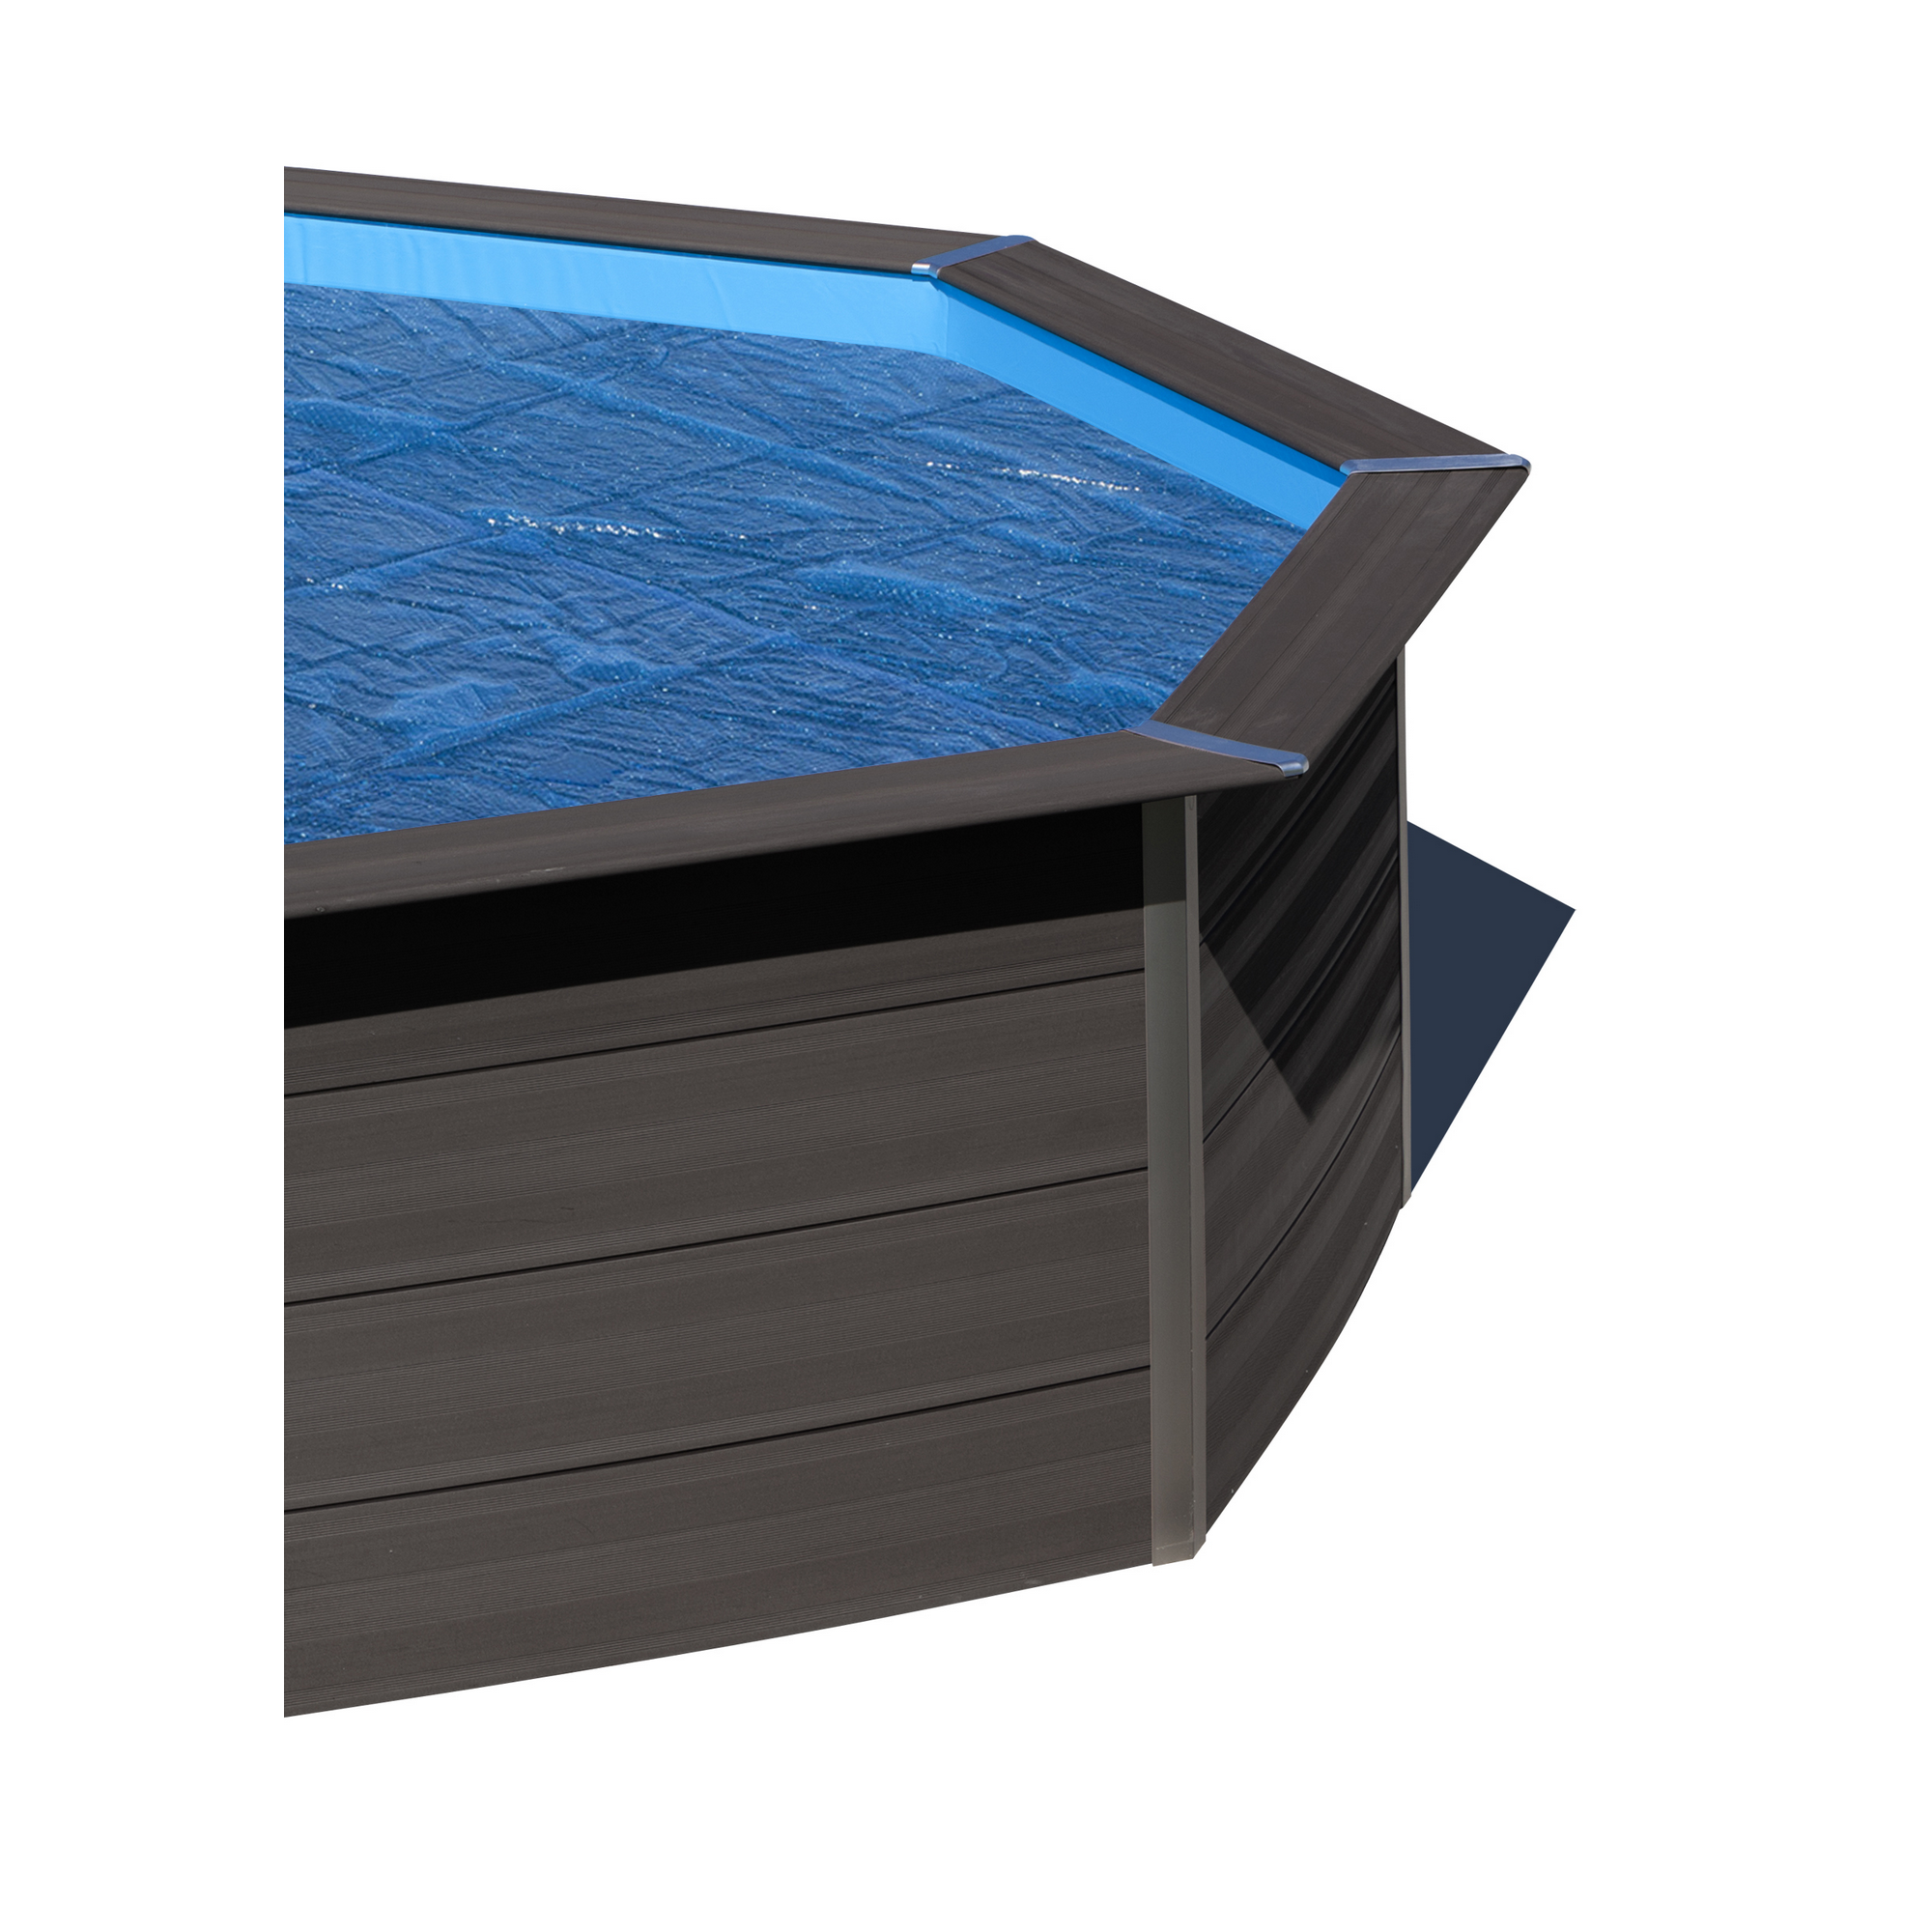 Sommerabdeckplane für Pool 'KPCOV52' blau 473 X 333 cm + product picture